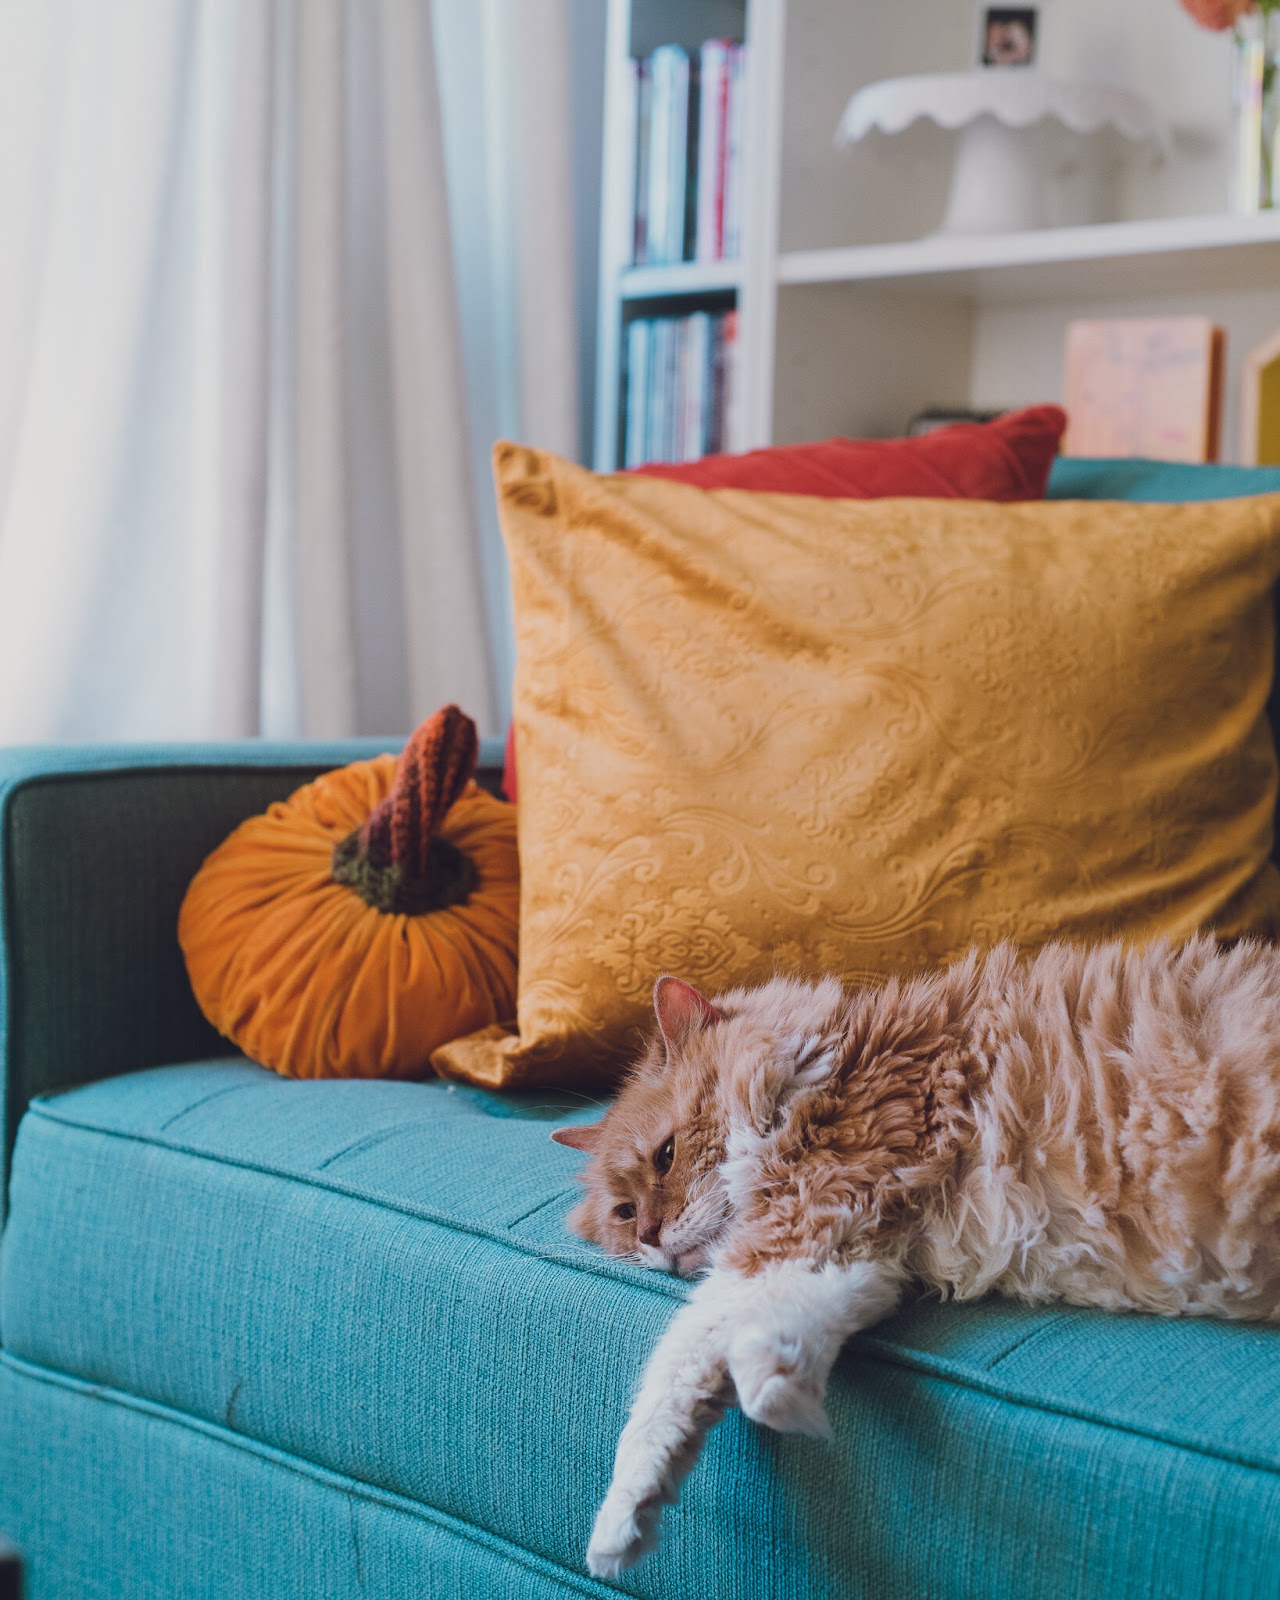 fall-bookshelf-orange-cat-blue-couch-decor-lily-muffins